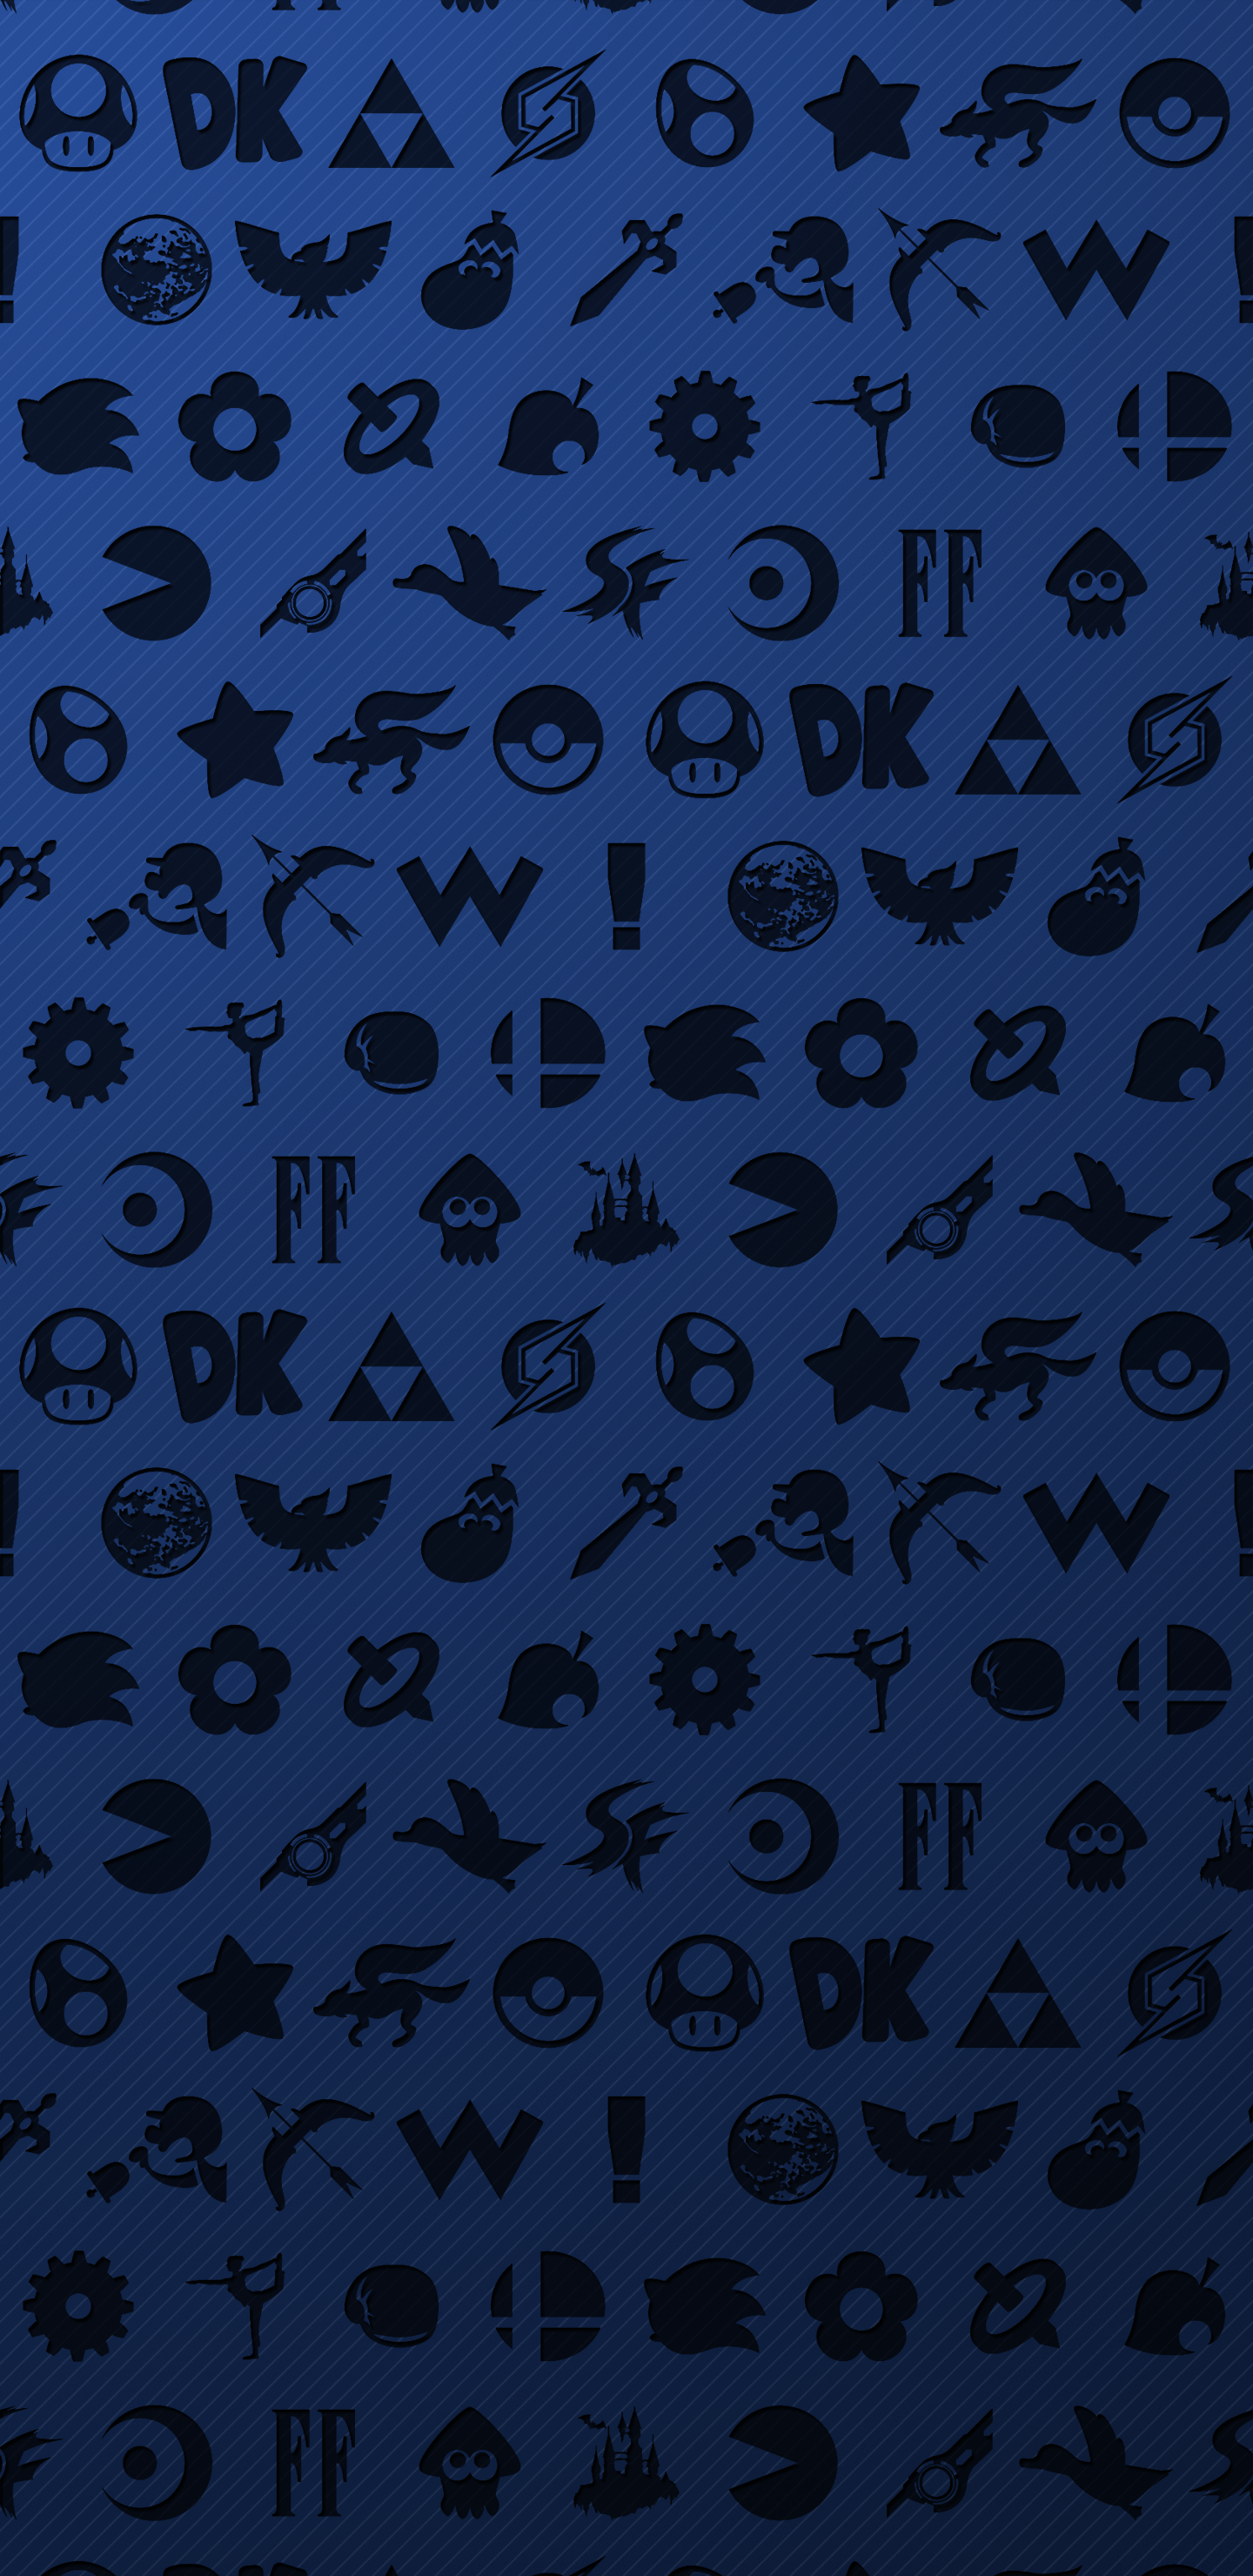 Smash Bros. Logos Wallpapers - Álbum en Imgur